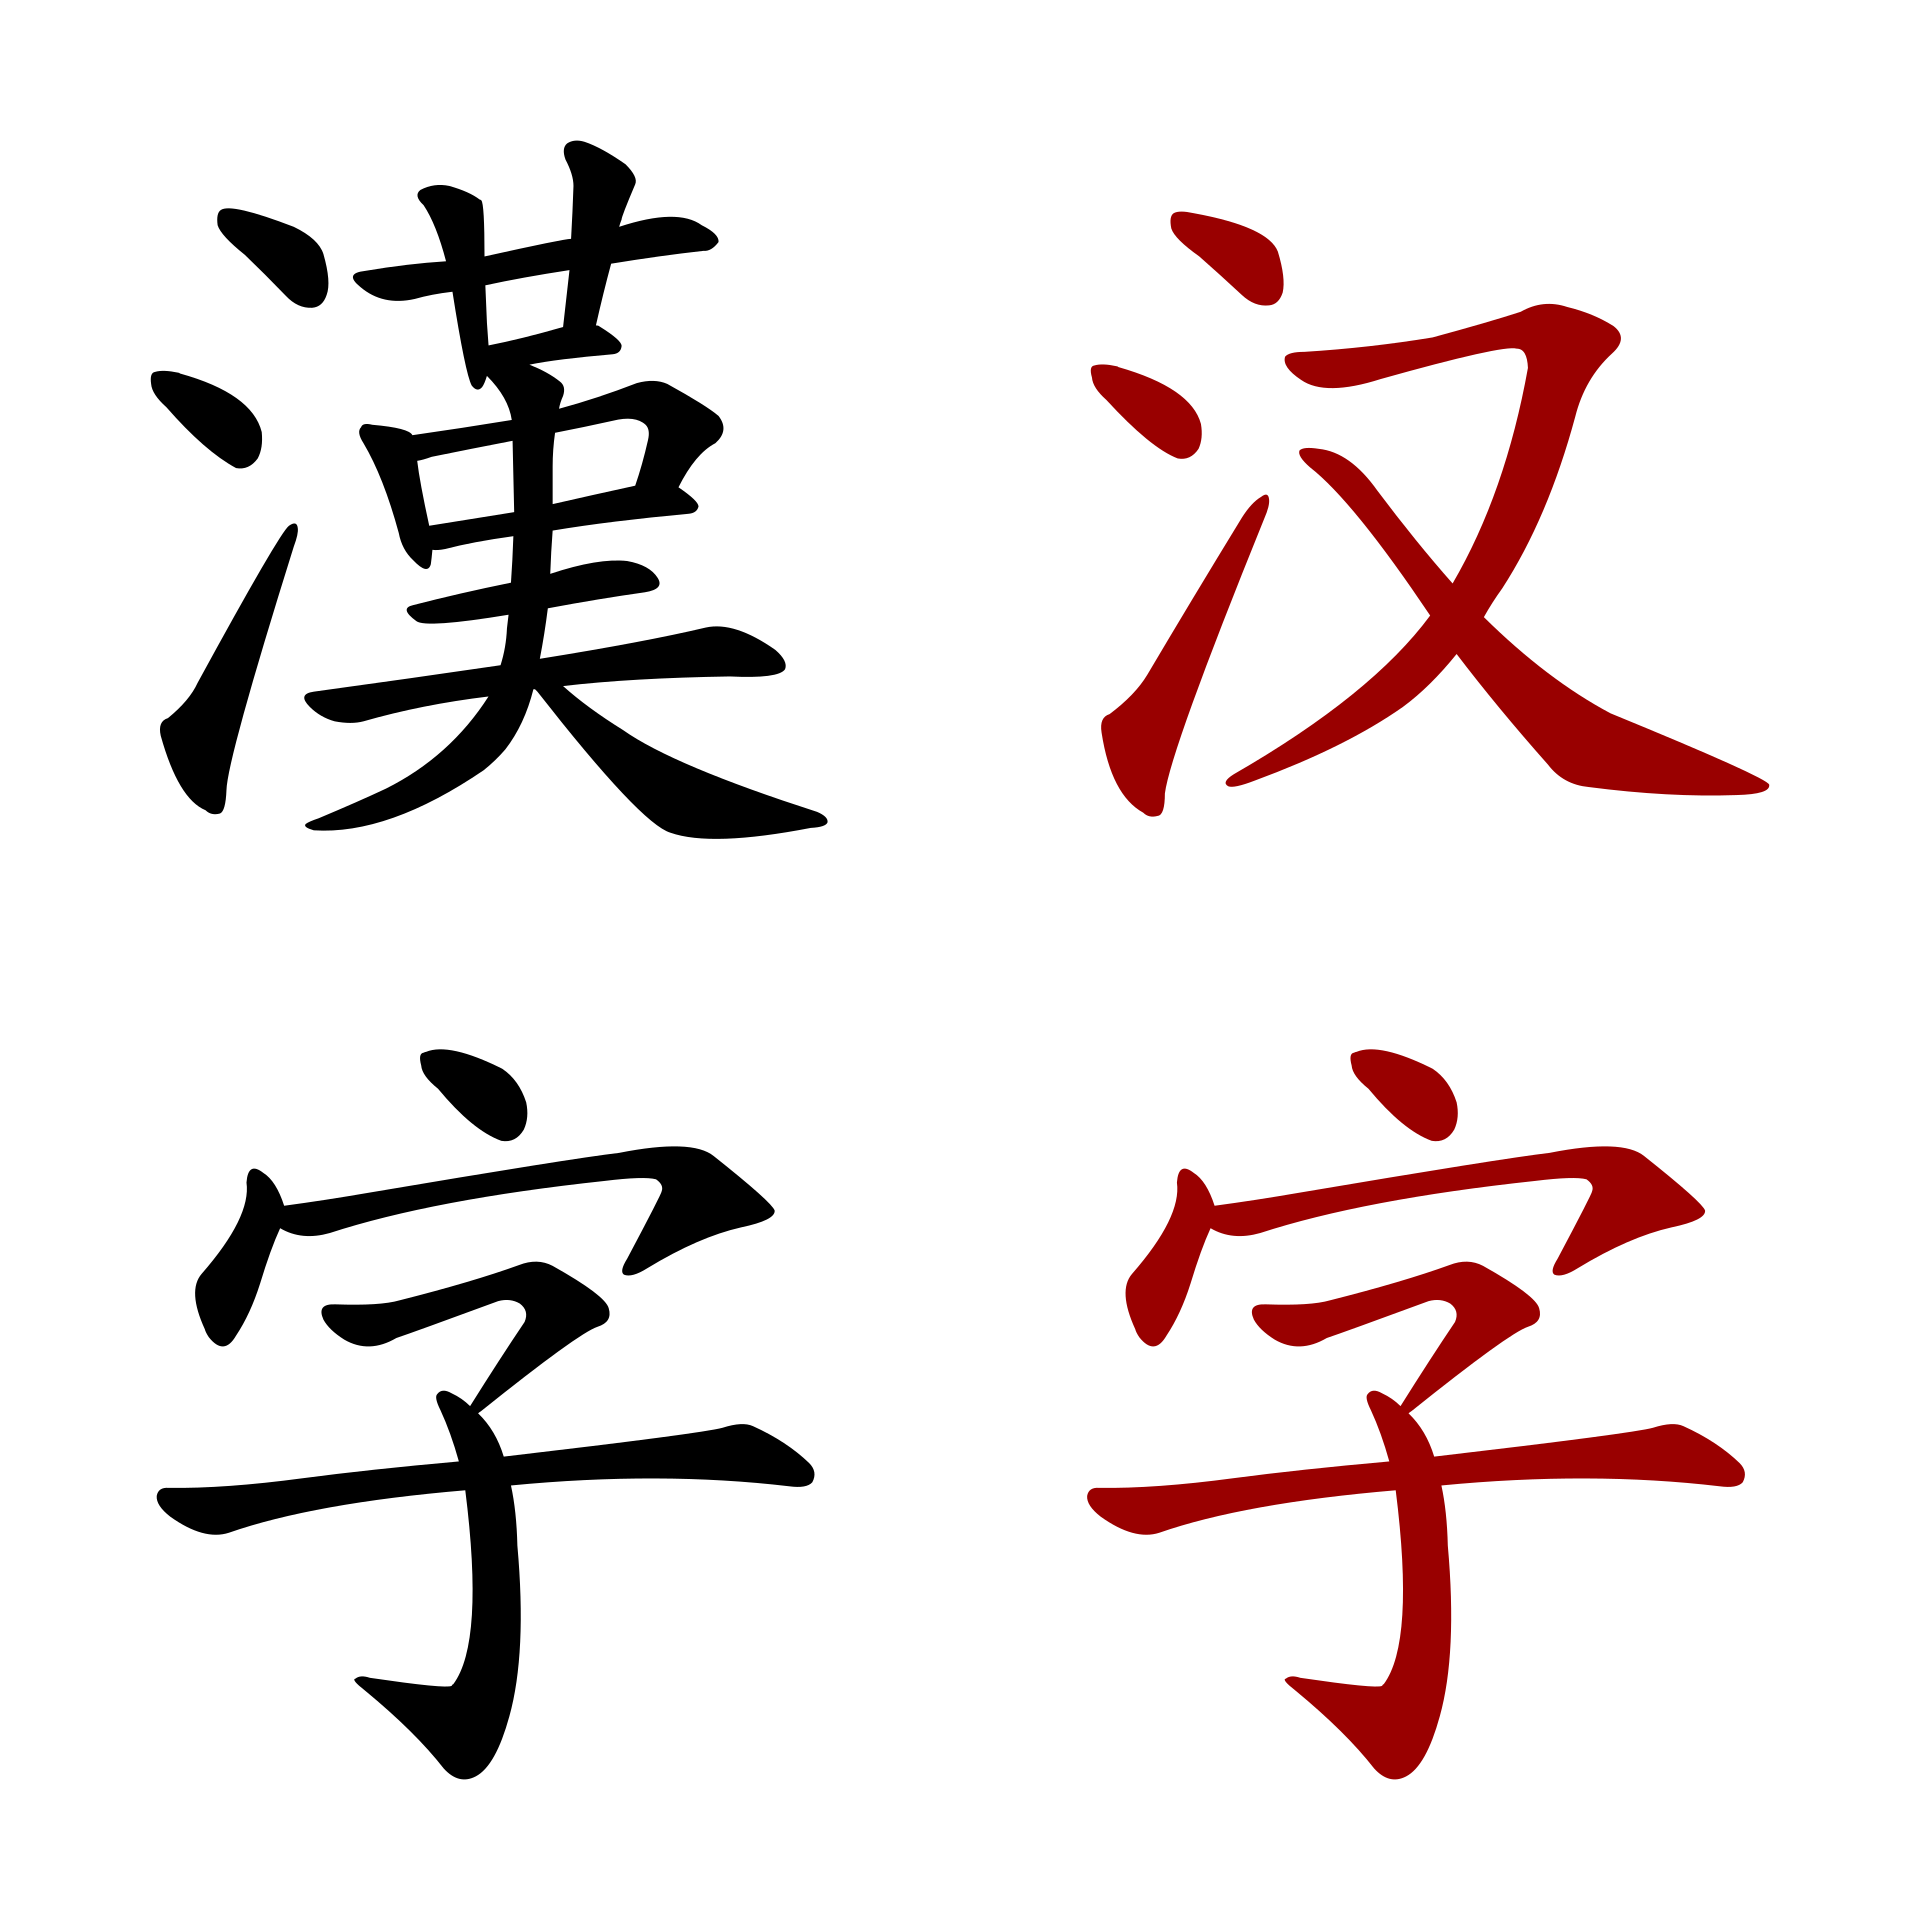 Chinese characters - Wikipedia